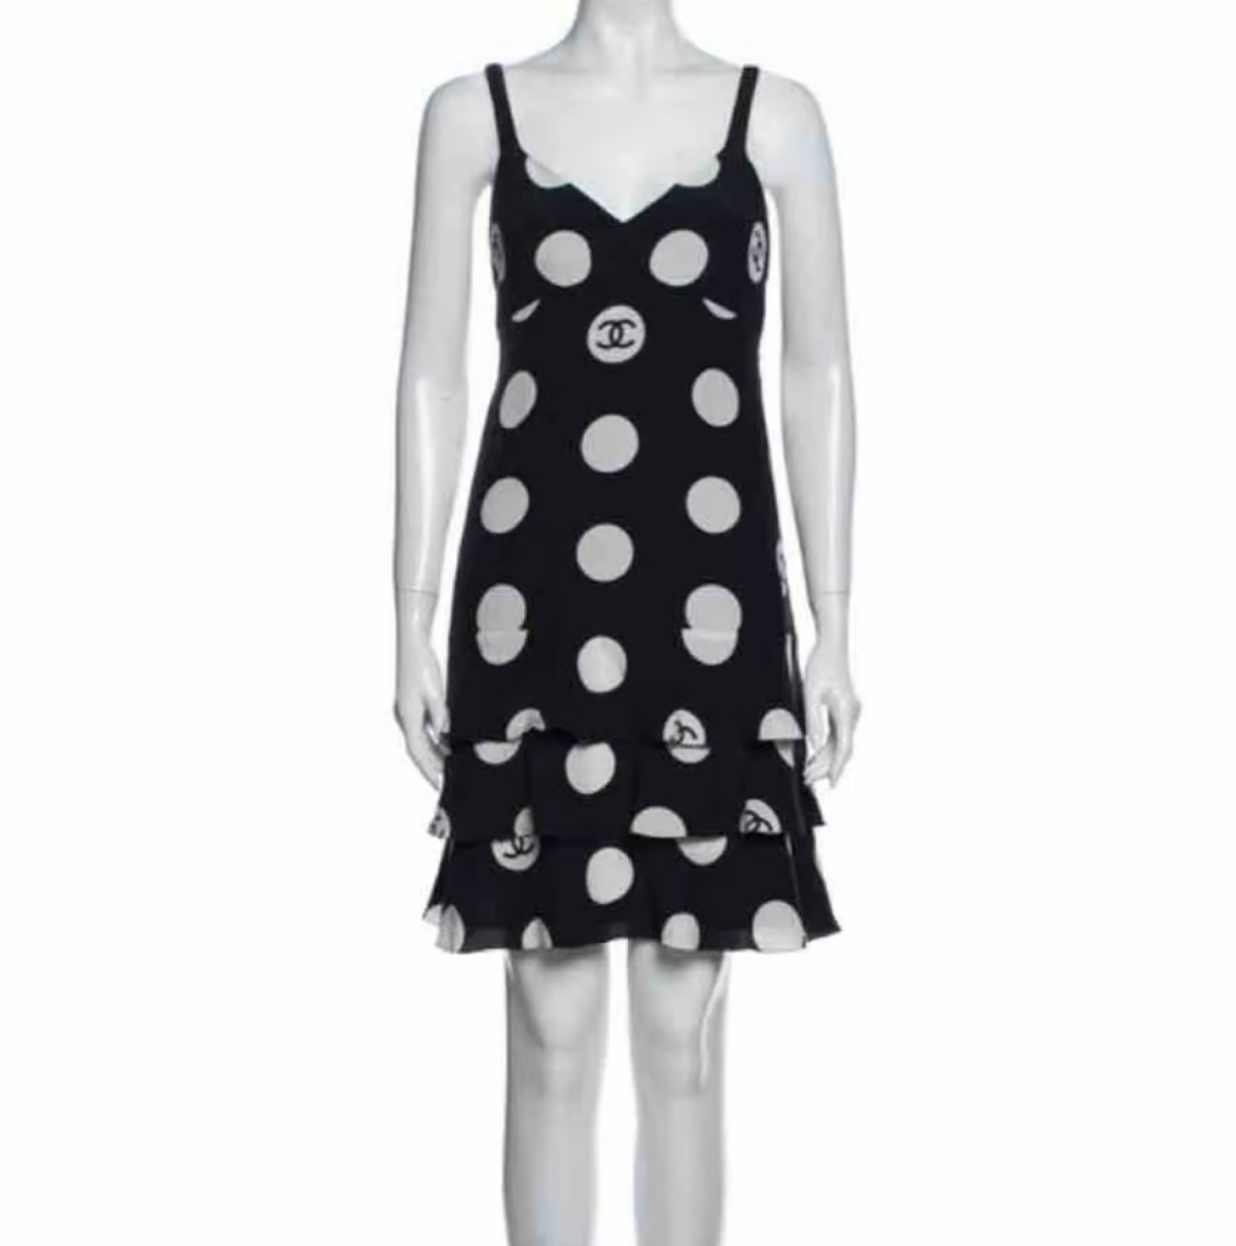 Dorit Kemsley's Black and White Polka Dot Dress